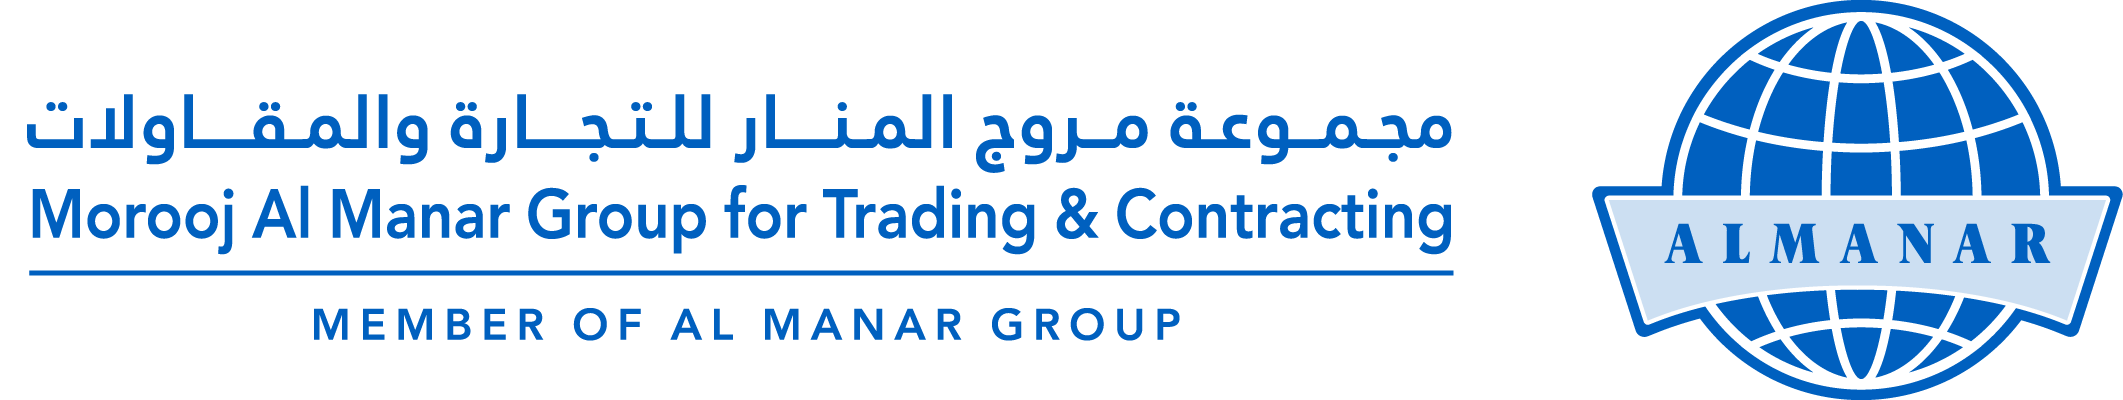 Morooj Al Manar Group of Trading & Contracting